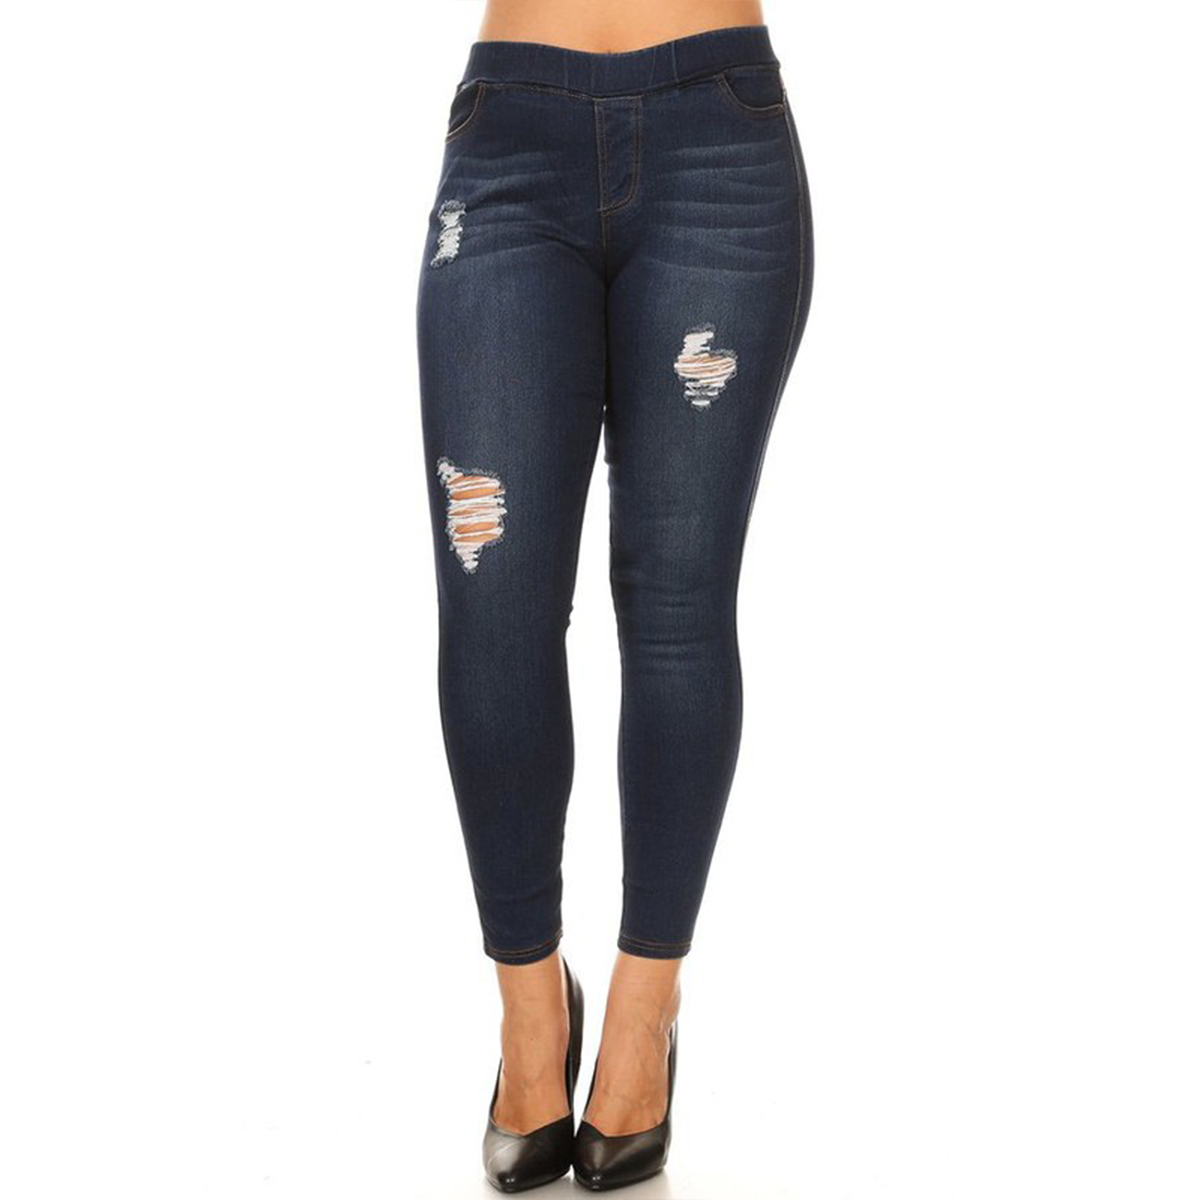 LAVRA Women's True Plus Size Jegging High Waist Jeans Full Length Denim Leggings with Pockets - image 1 of 4